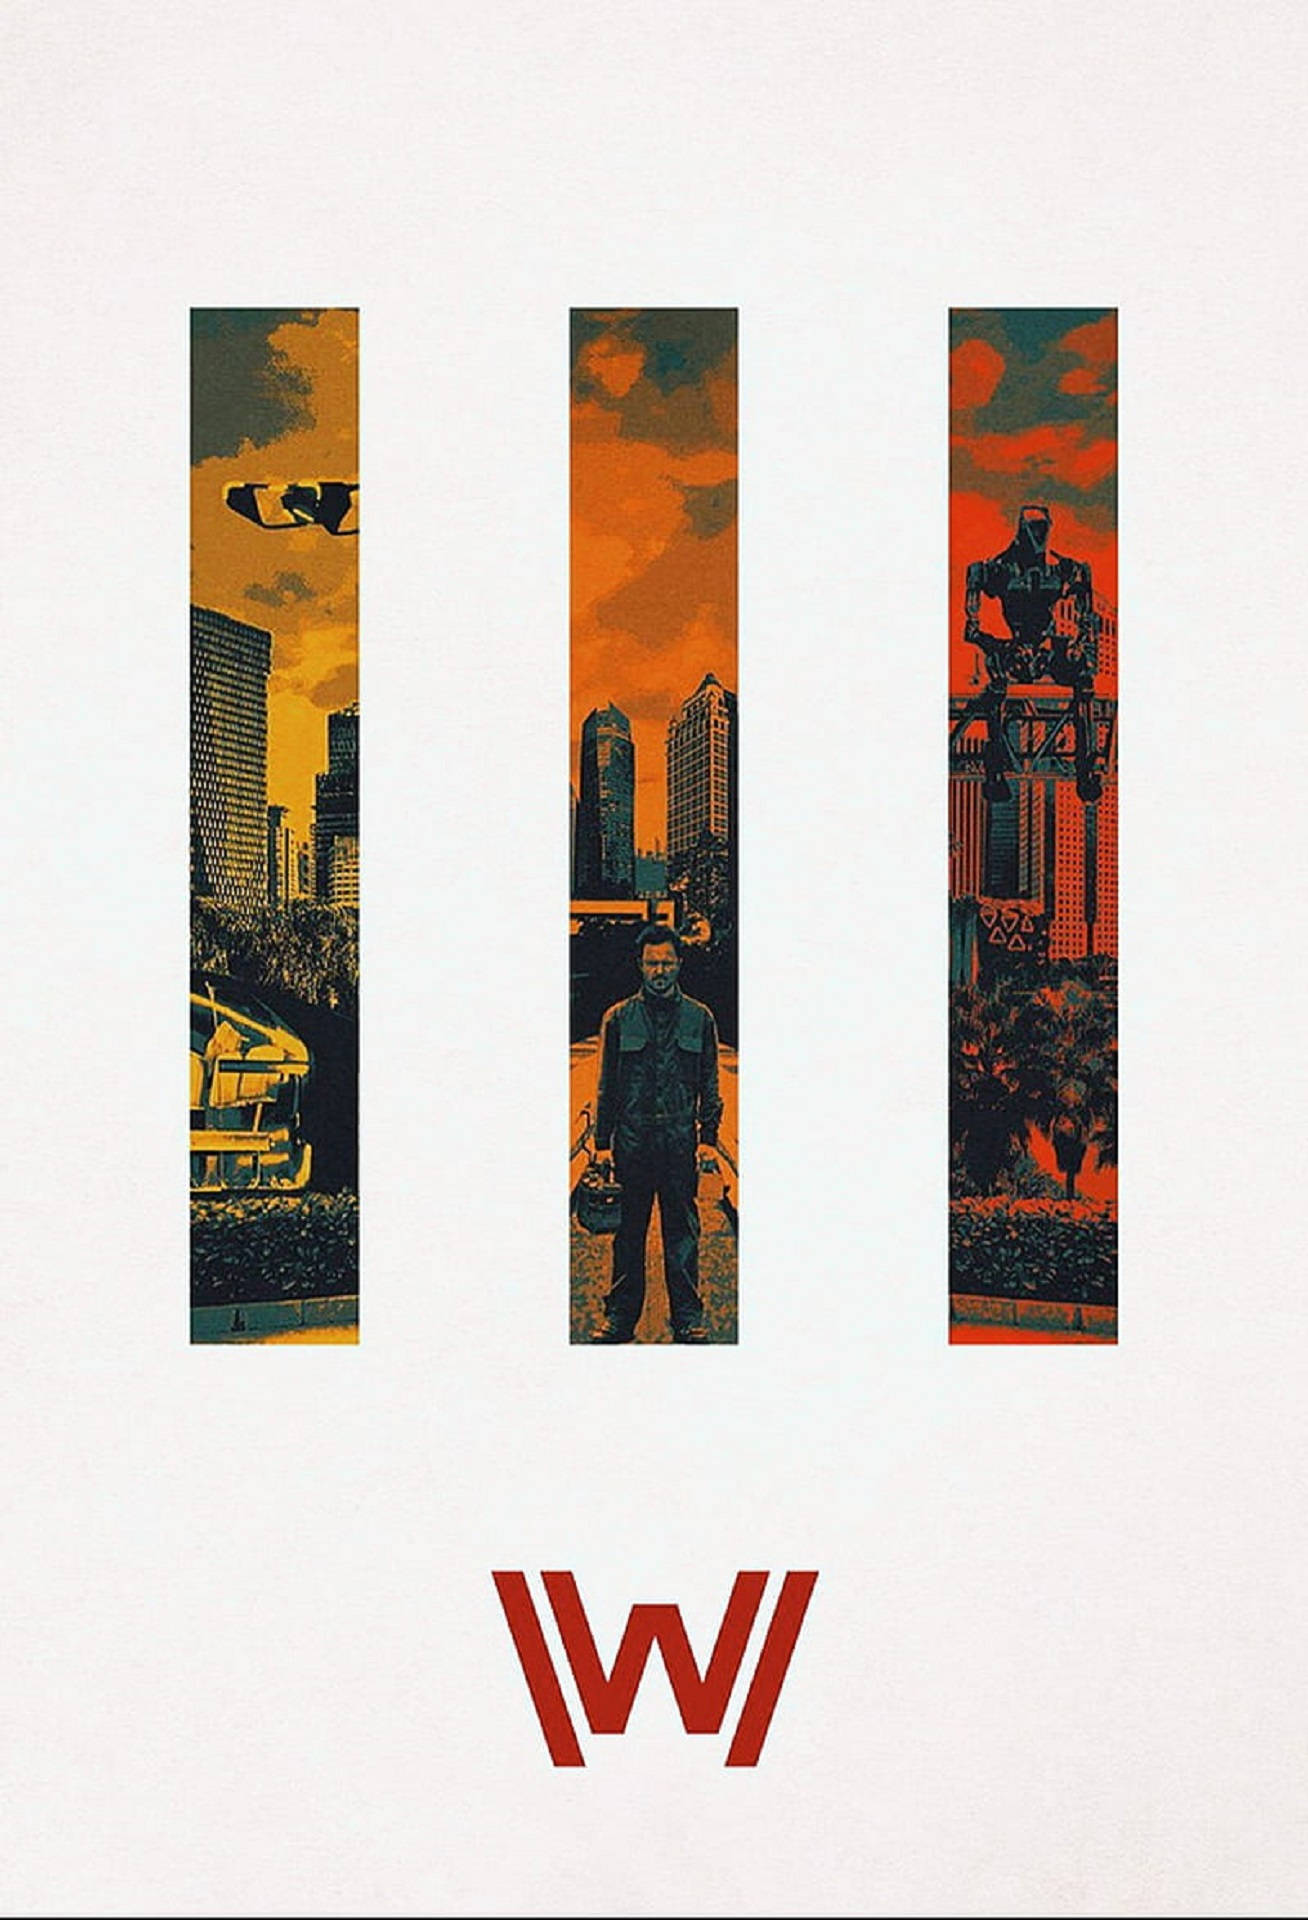 Actor Aaron Paul In Westworld Banner Background